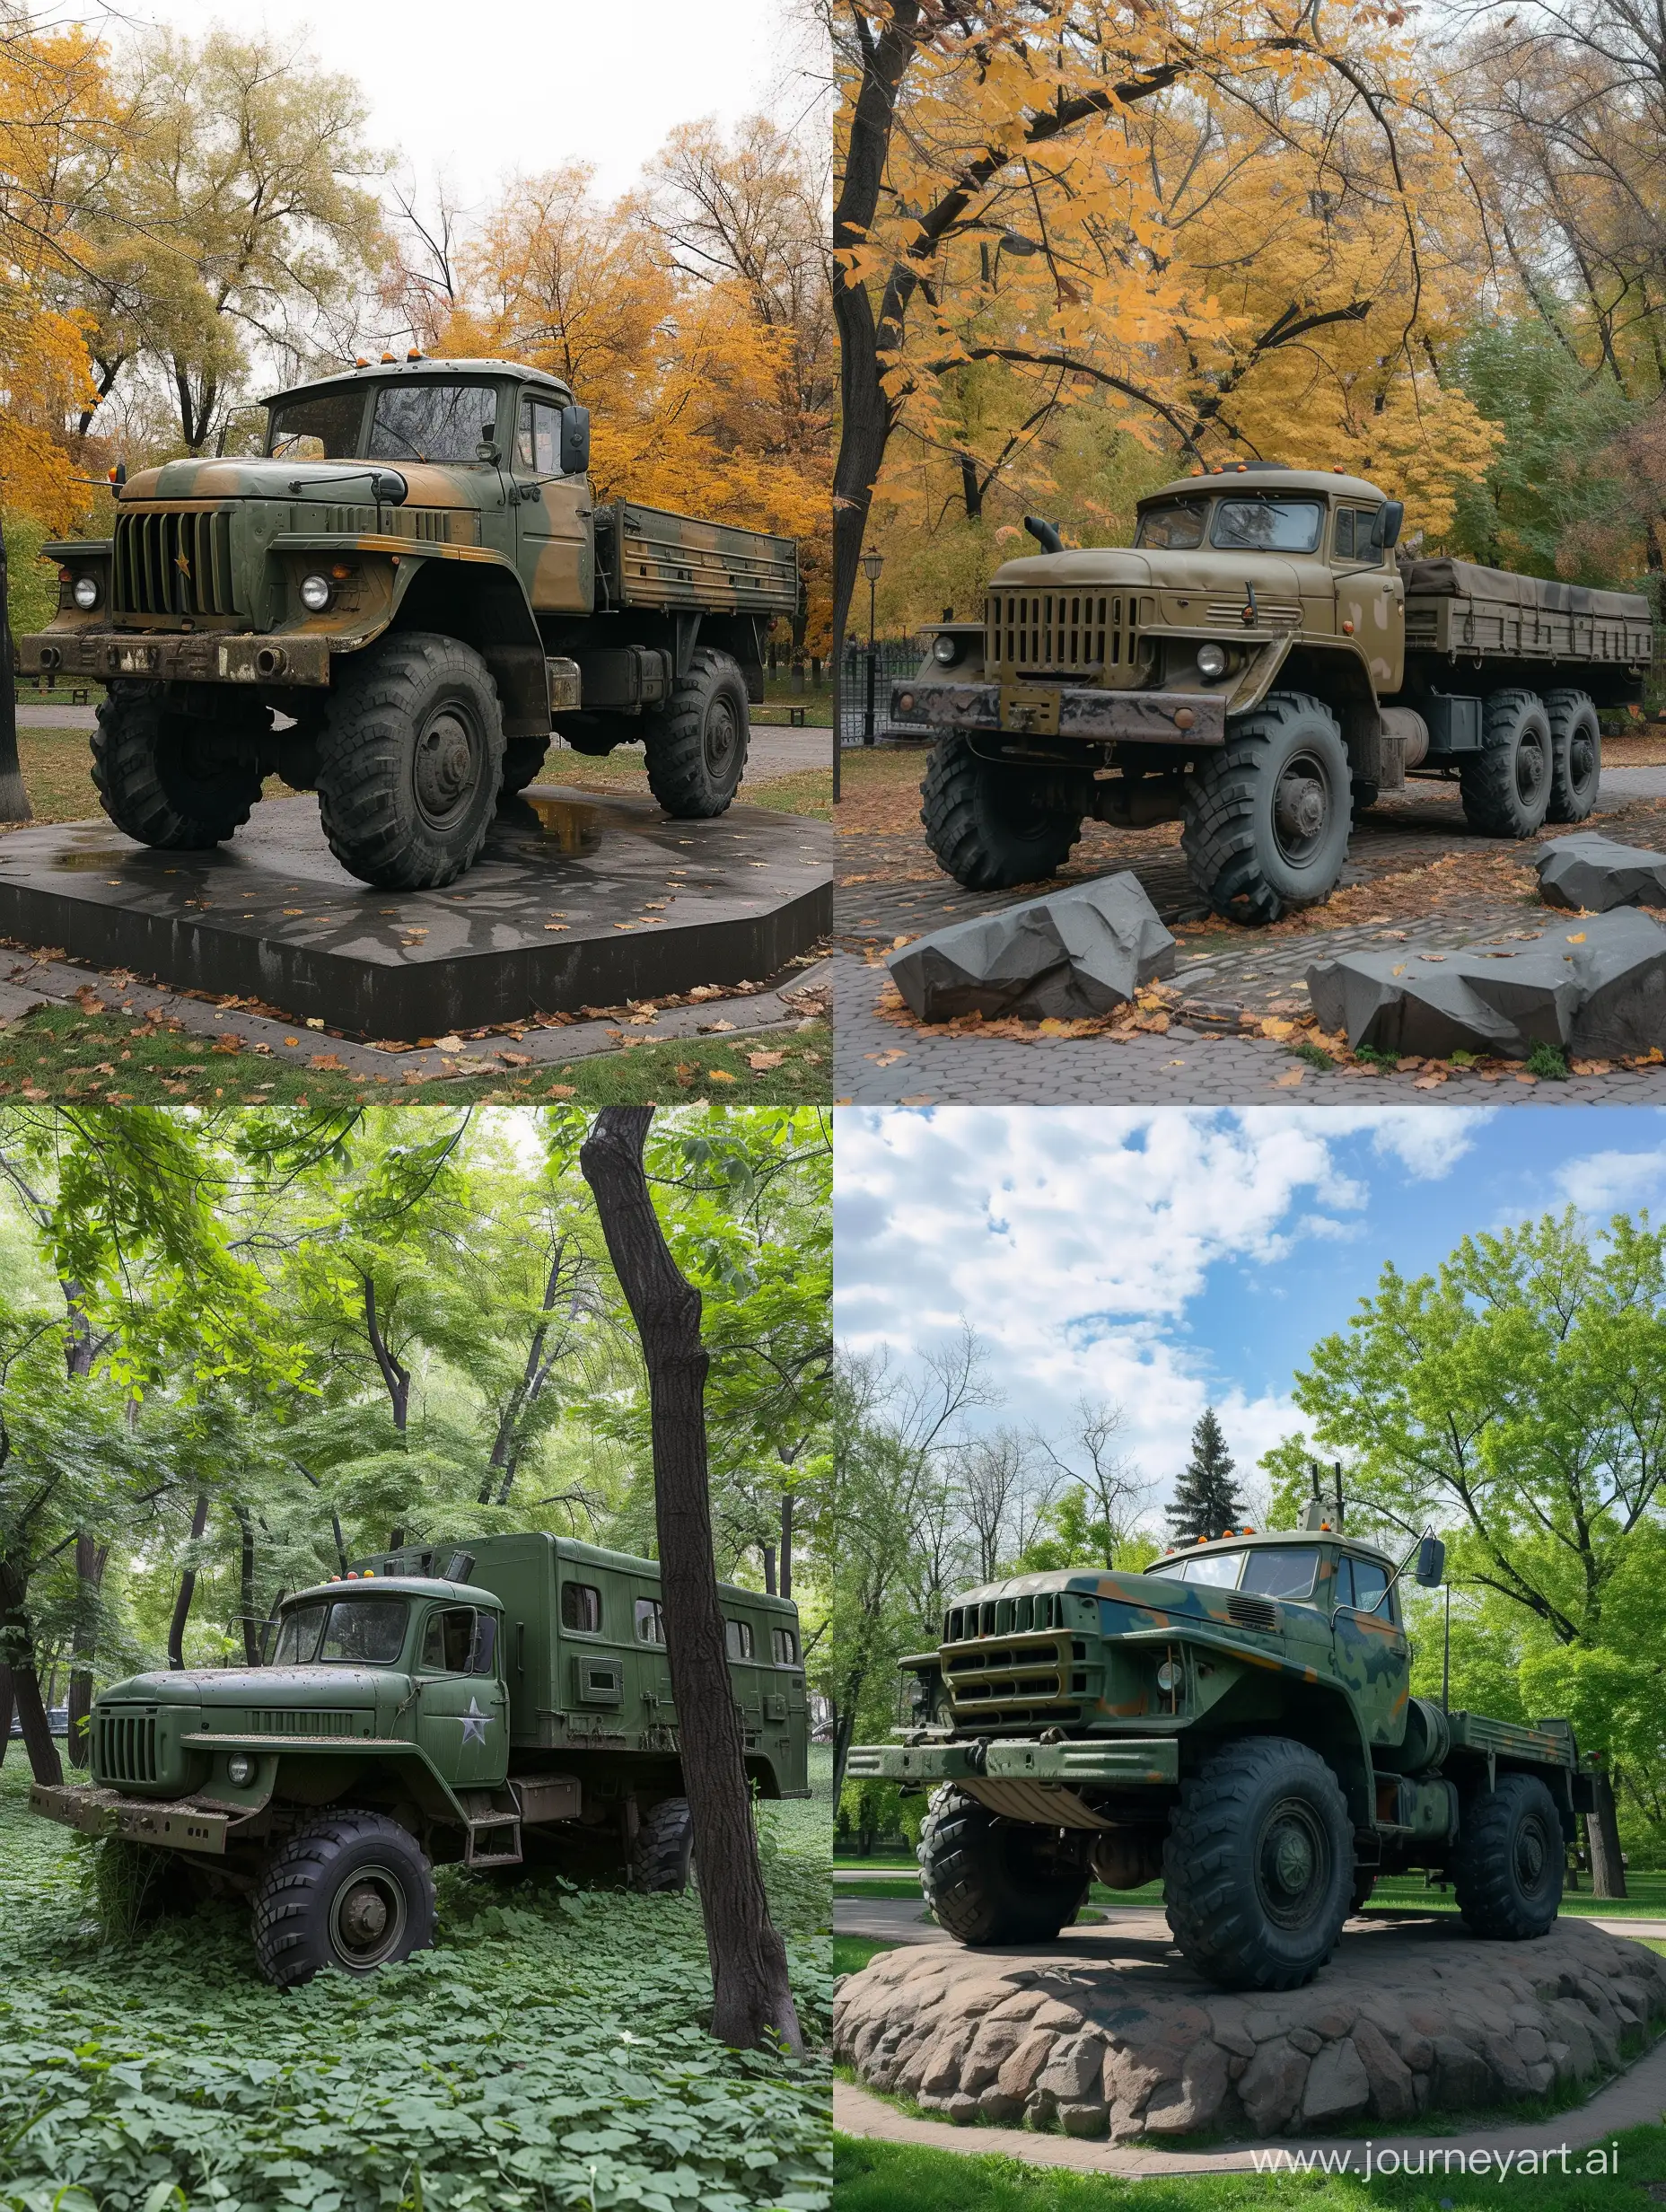 Artistic-Display-of-Military-Trucks-Ural-in-Park-Setting